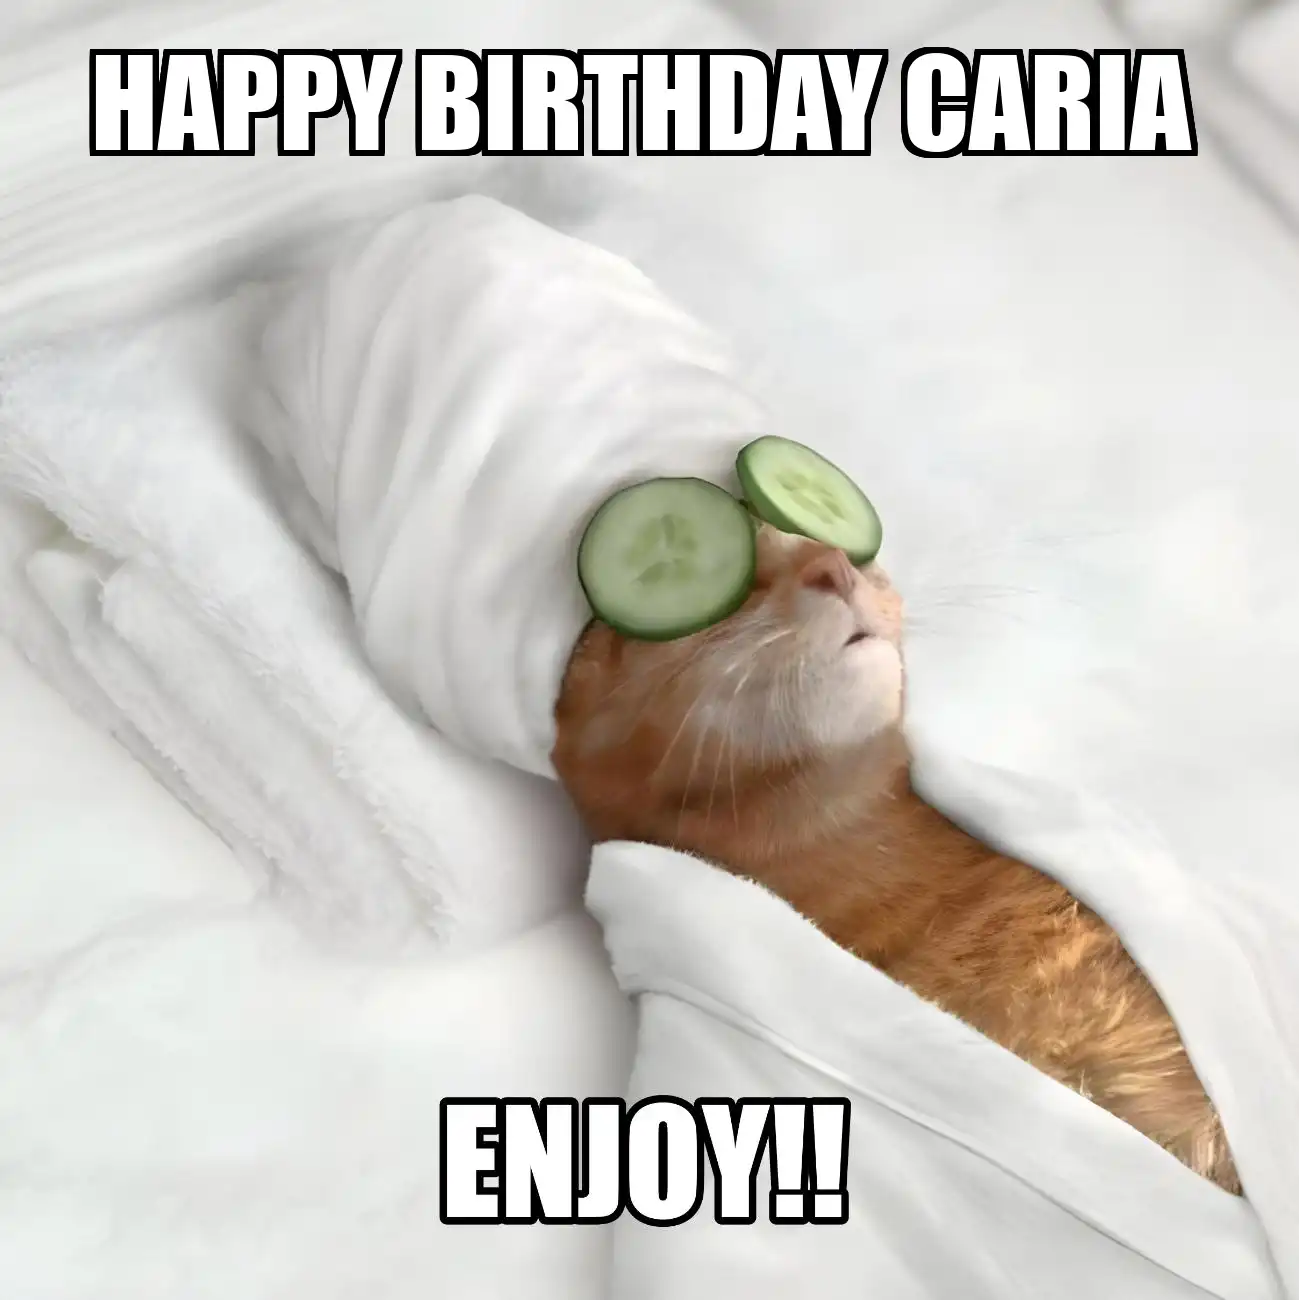 Happy Birthday Caria Enjoy Cat Meme